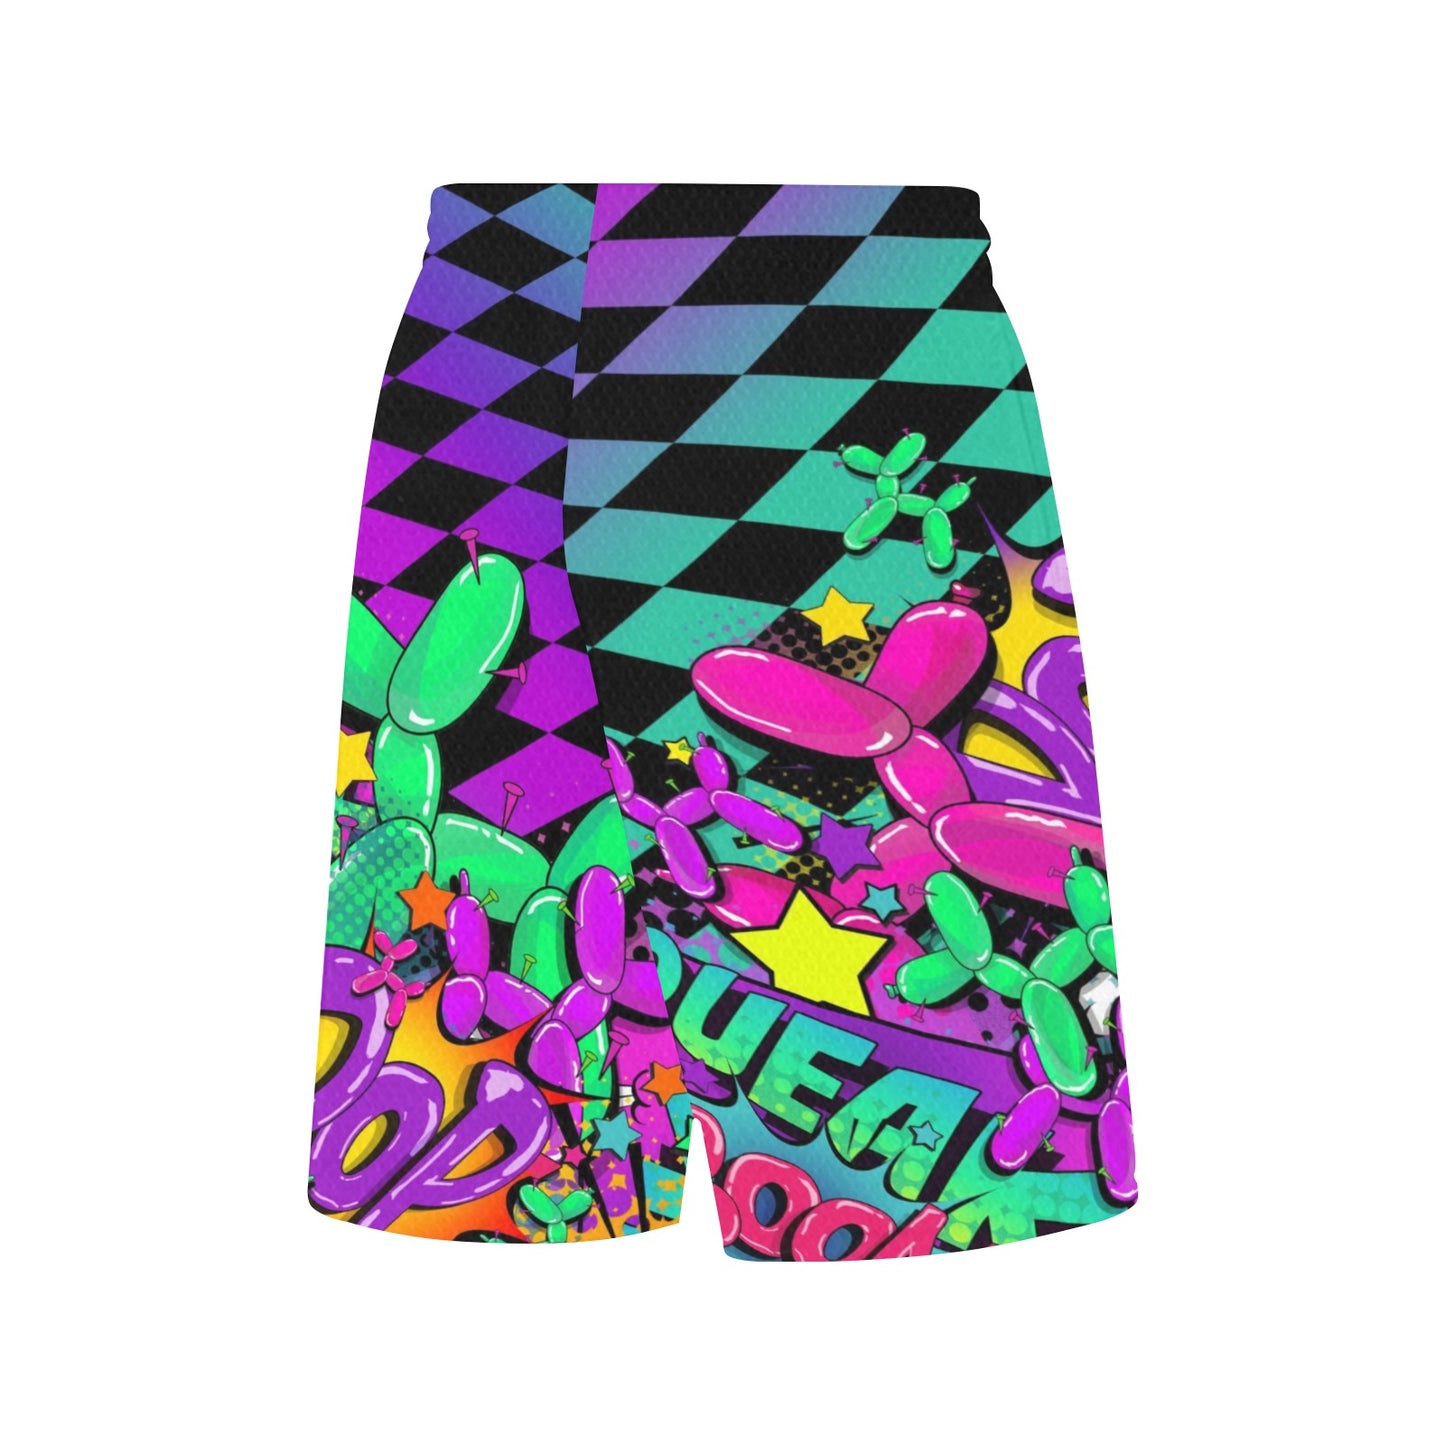 Basketball shorts for balloon twisters fun colourful pop art design